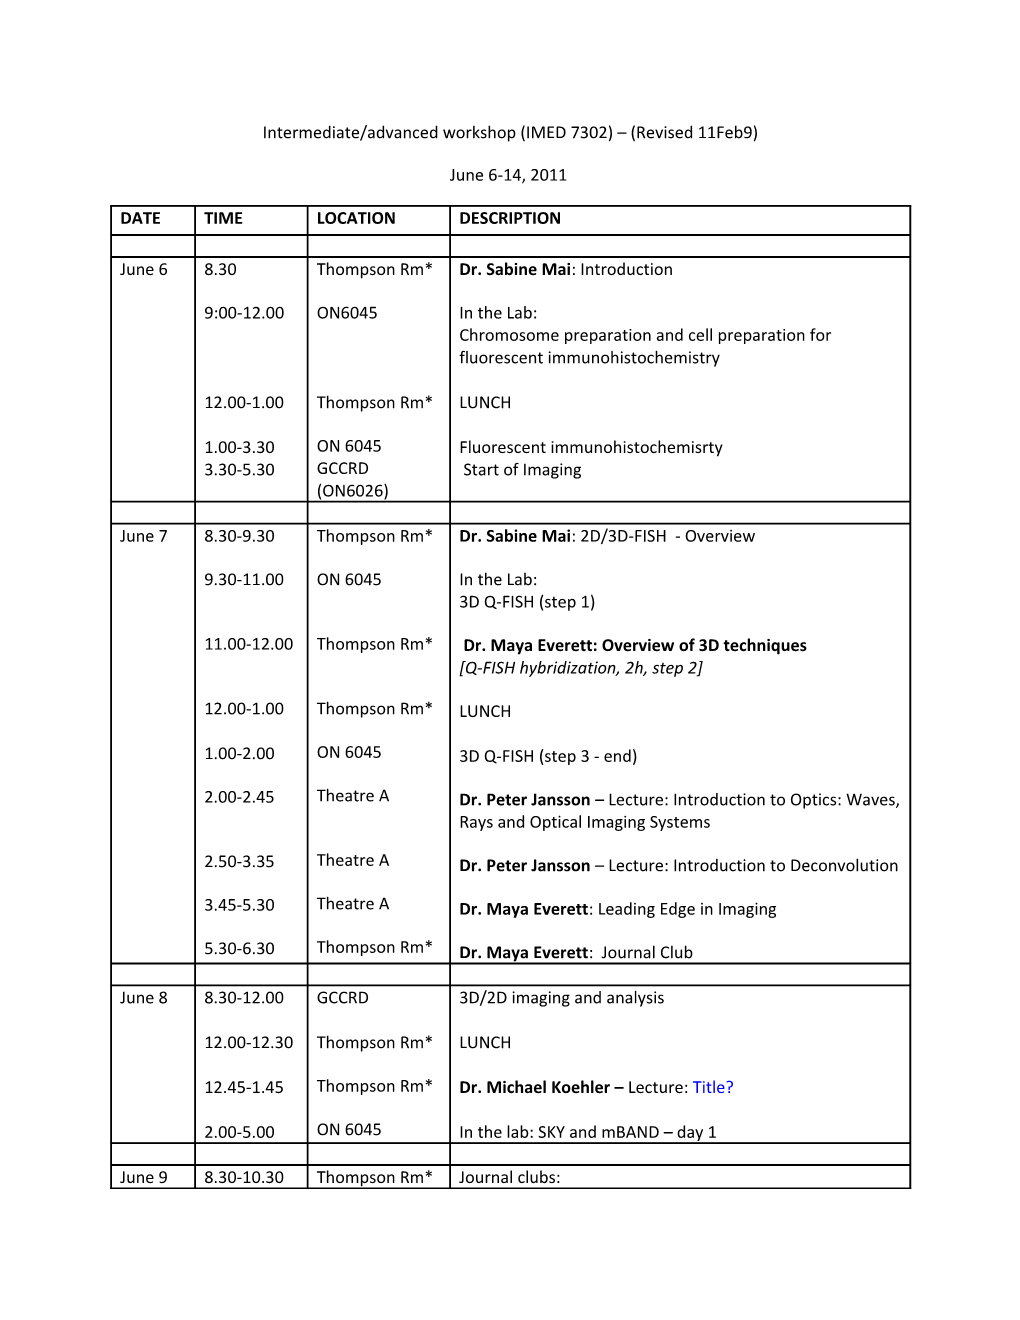 Intermediate/Advanced Workshop (IMED 7302) (Revised 11Feb9)